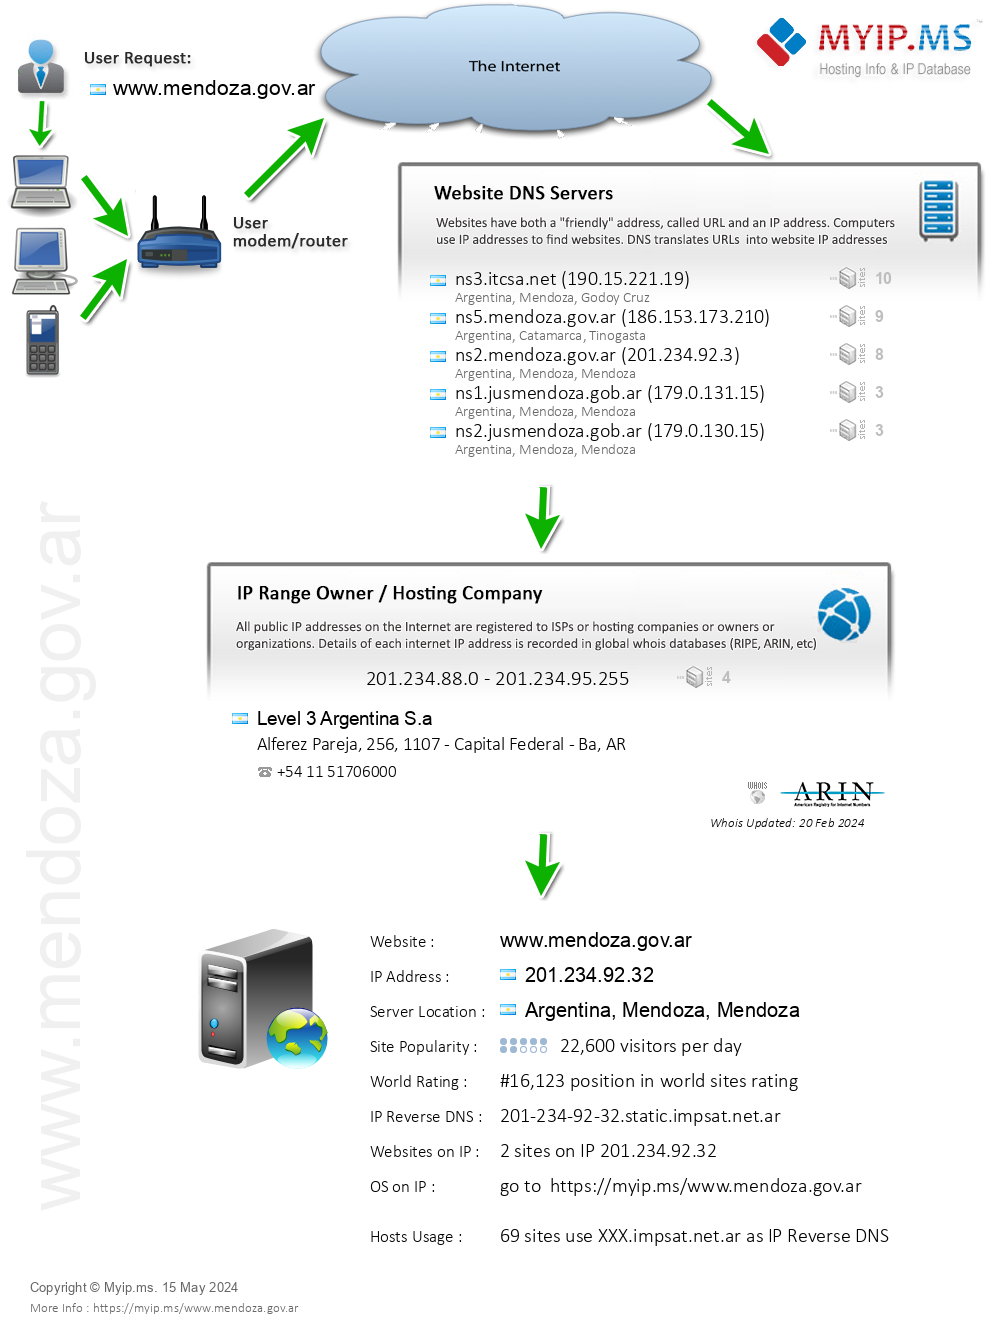 Mendoza.gov.ar - Website Hosting Visual IP Diagram